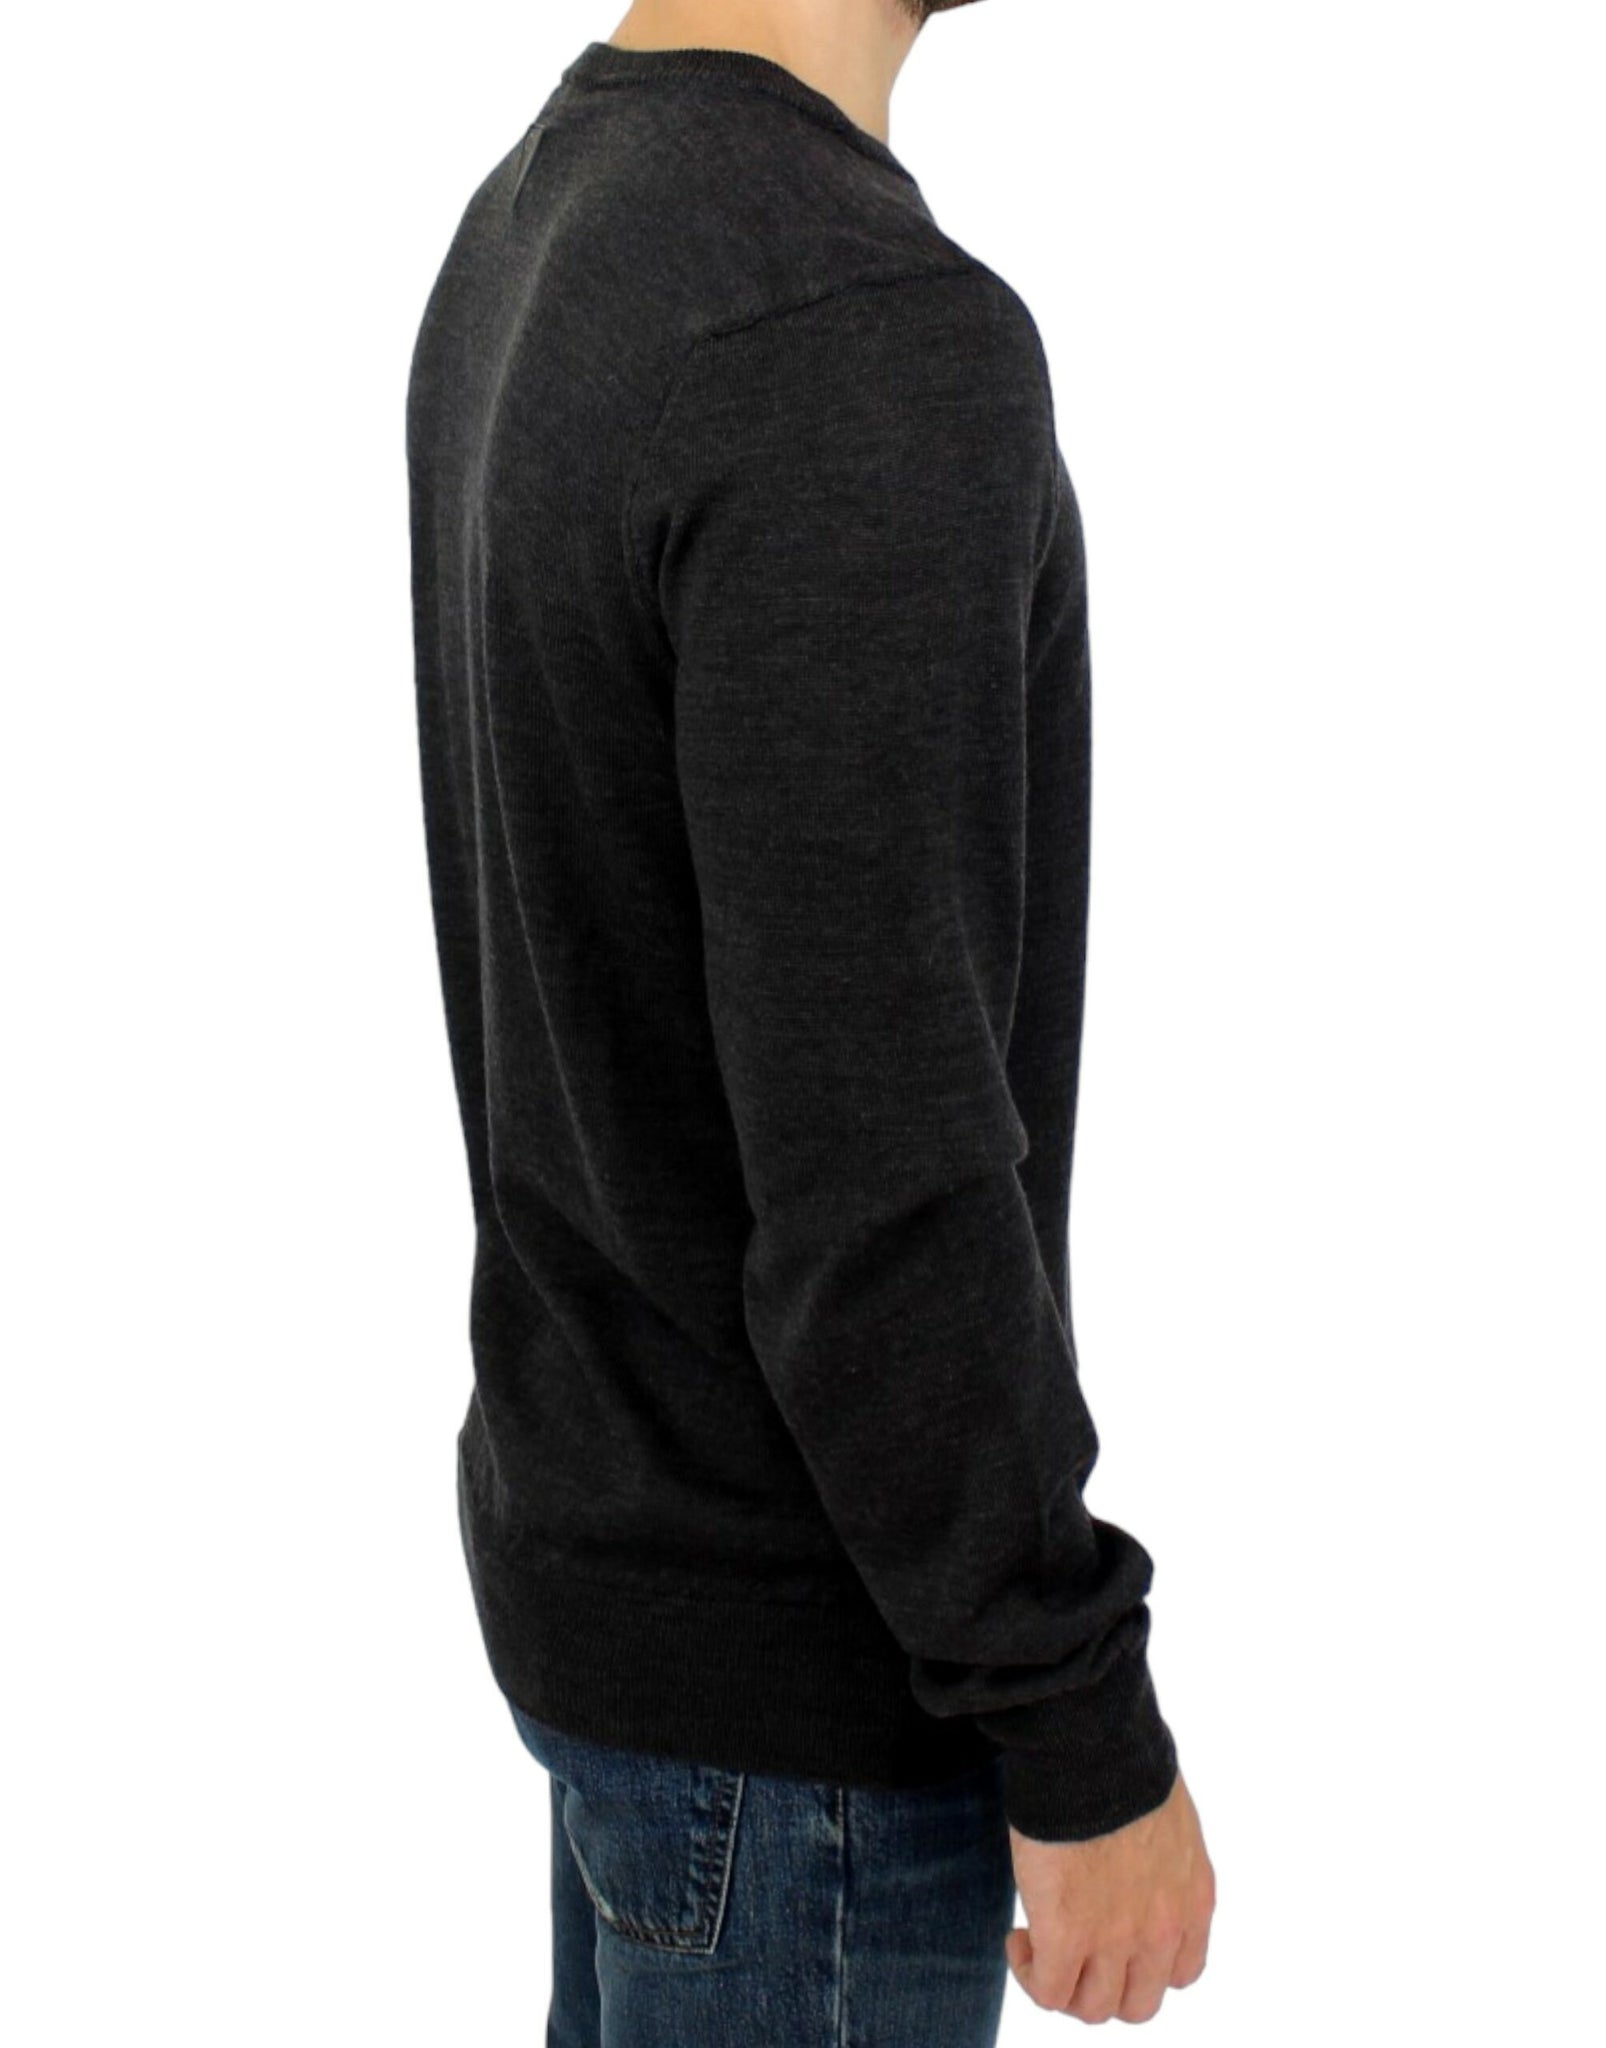 Gray crewneck pullover sweater